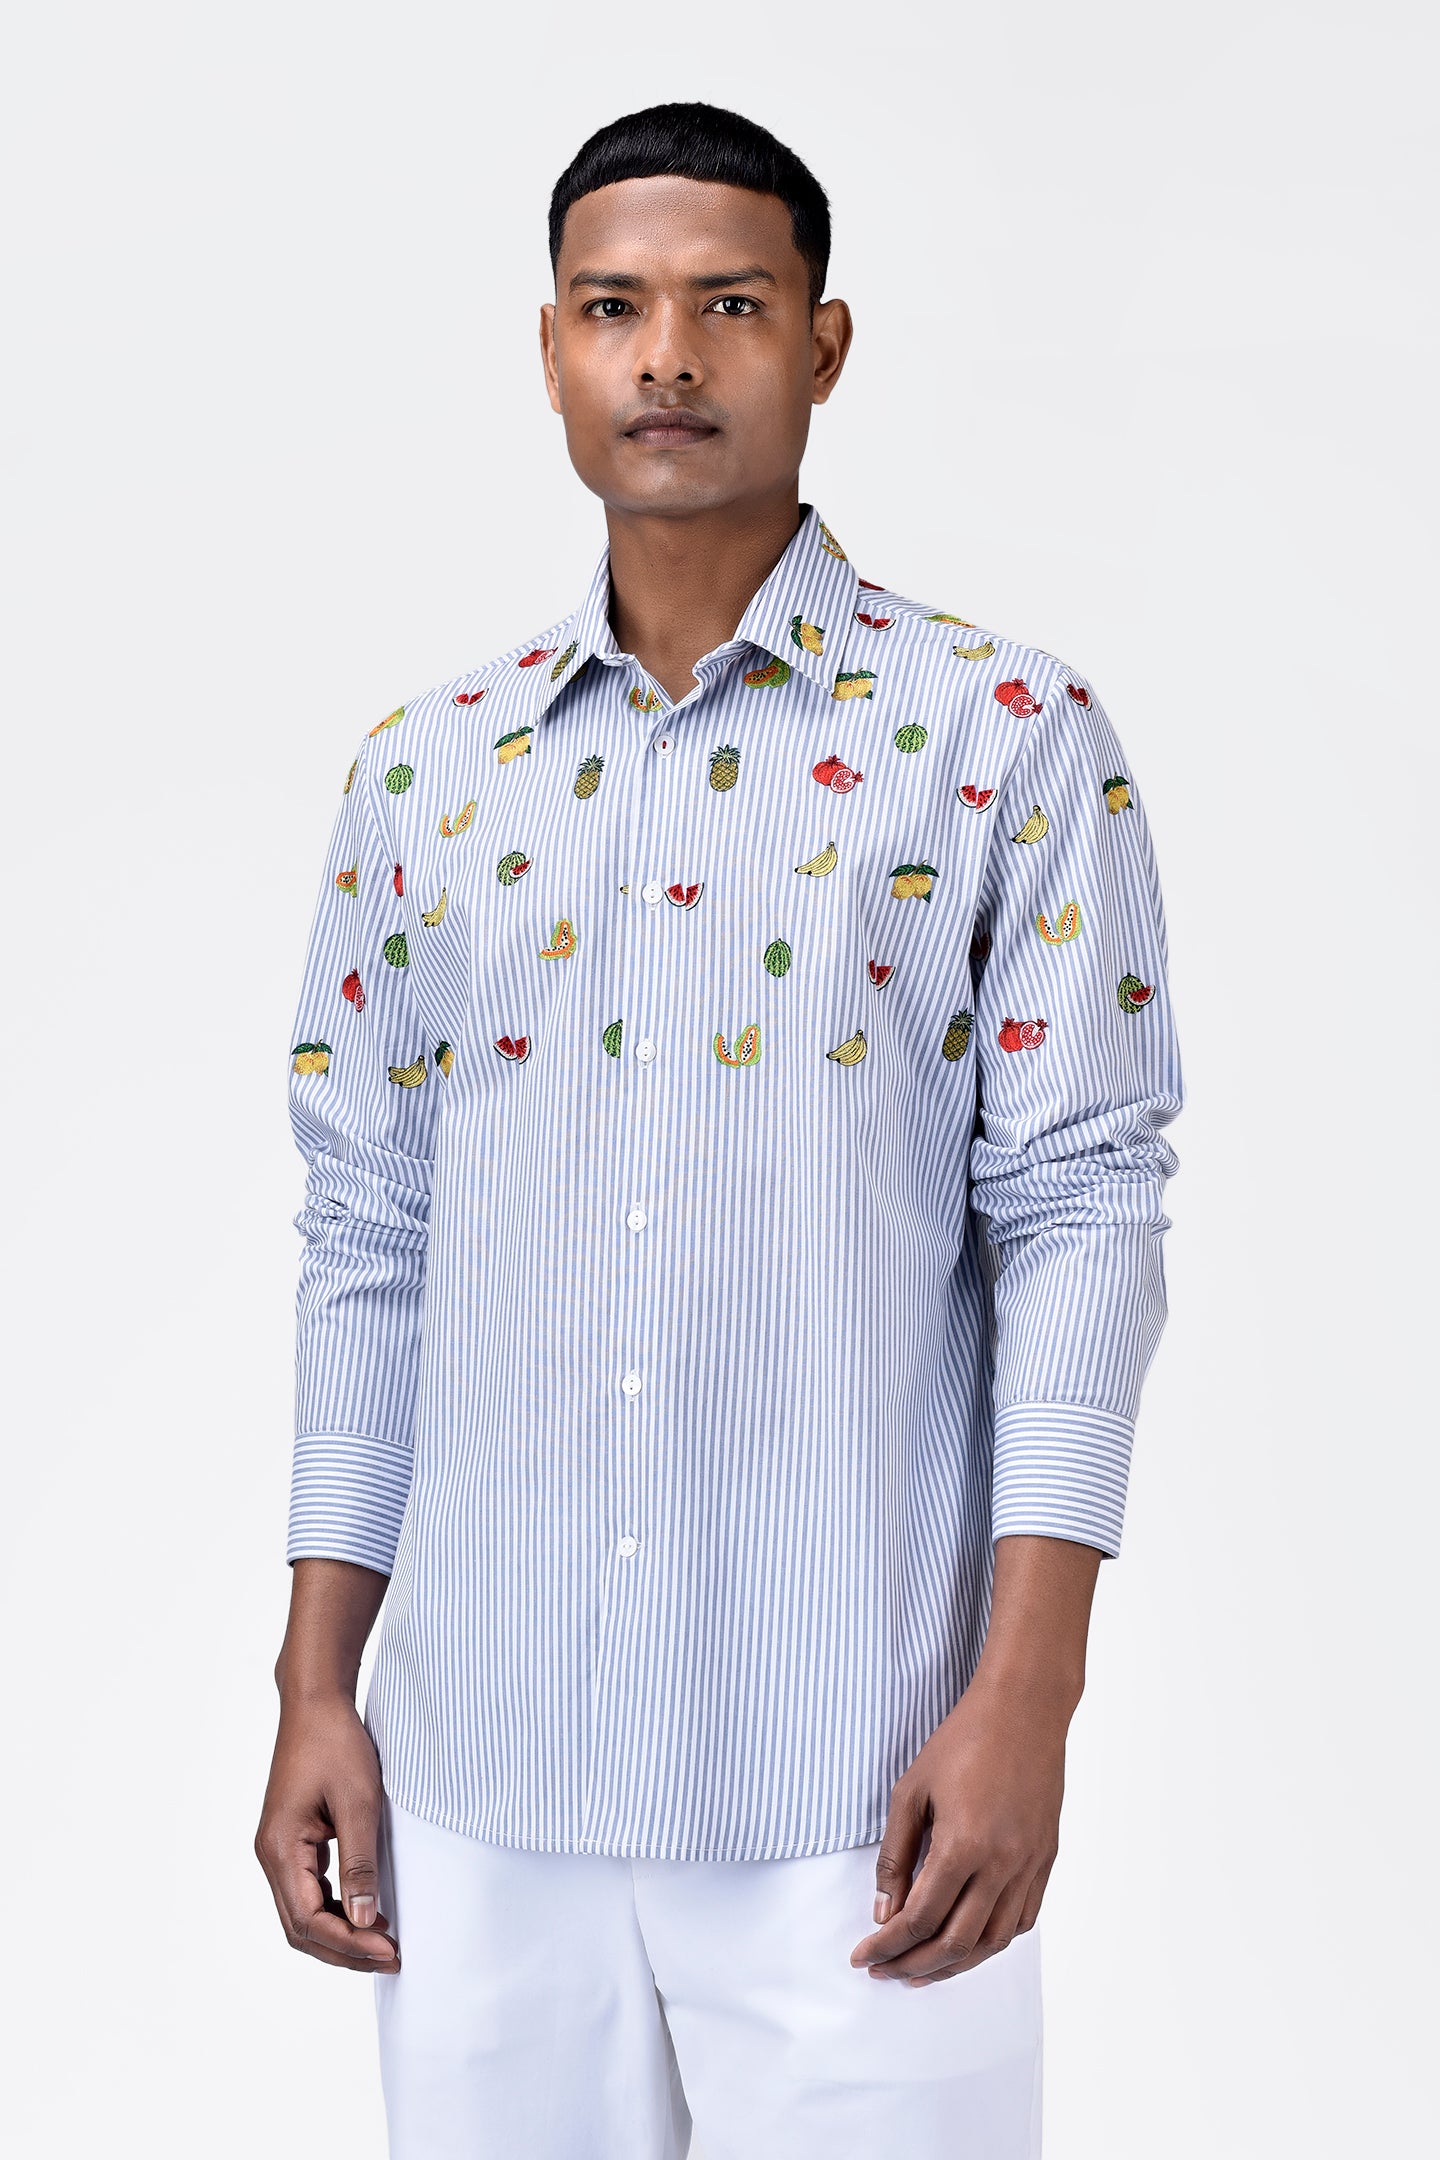 Fruit Motifs Embroidered Striped Men's Button-Down Shirt